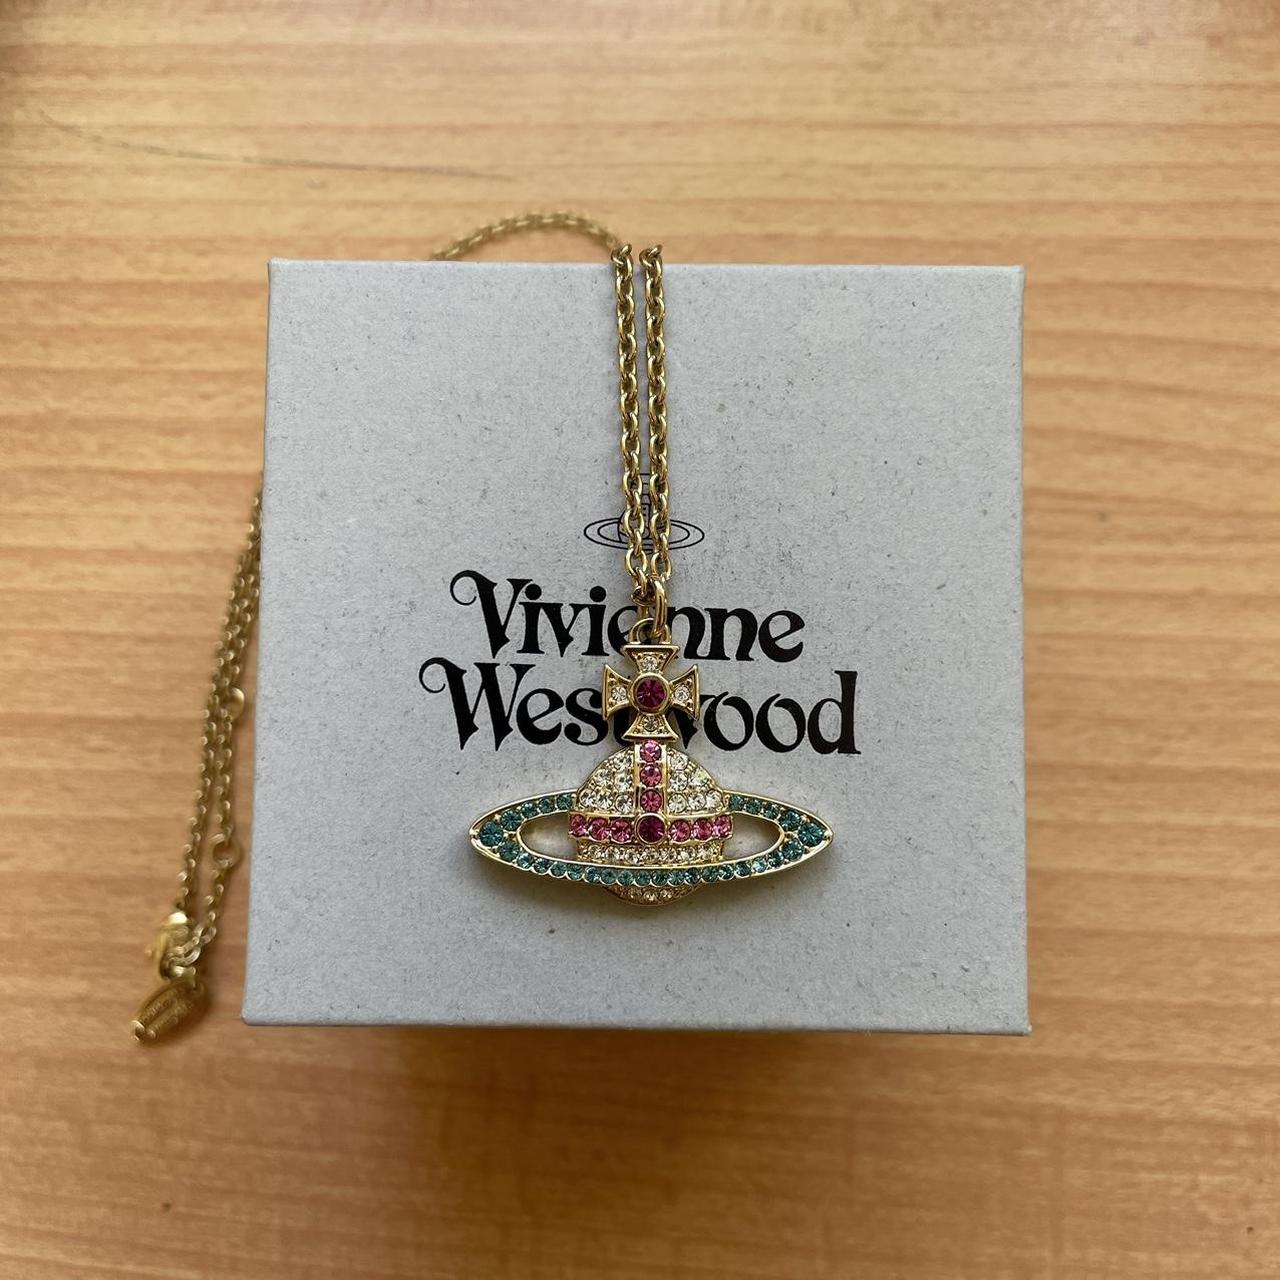 Vivienne Westwood Kika Necklace - Honestly worn... - Depop